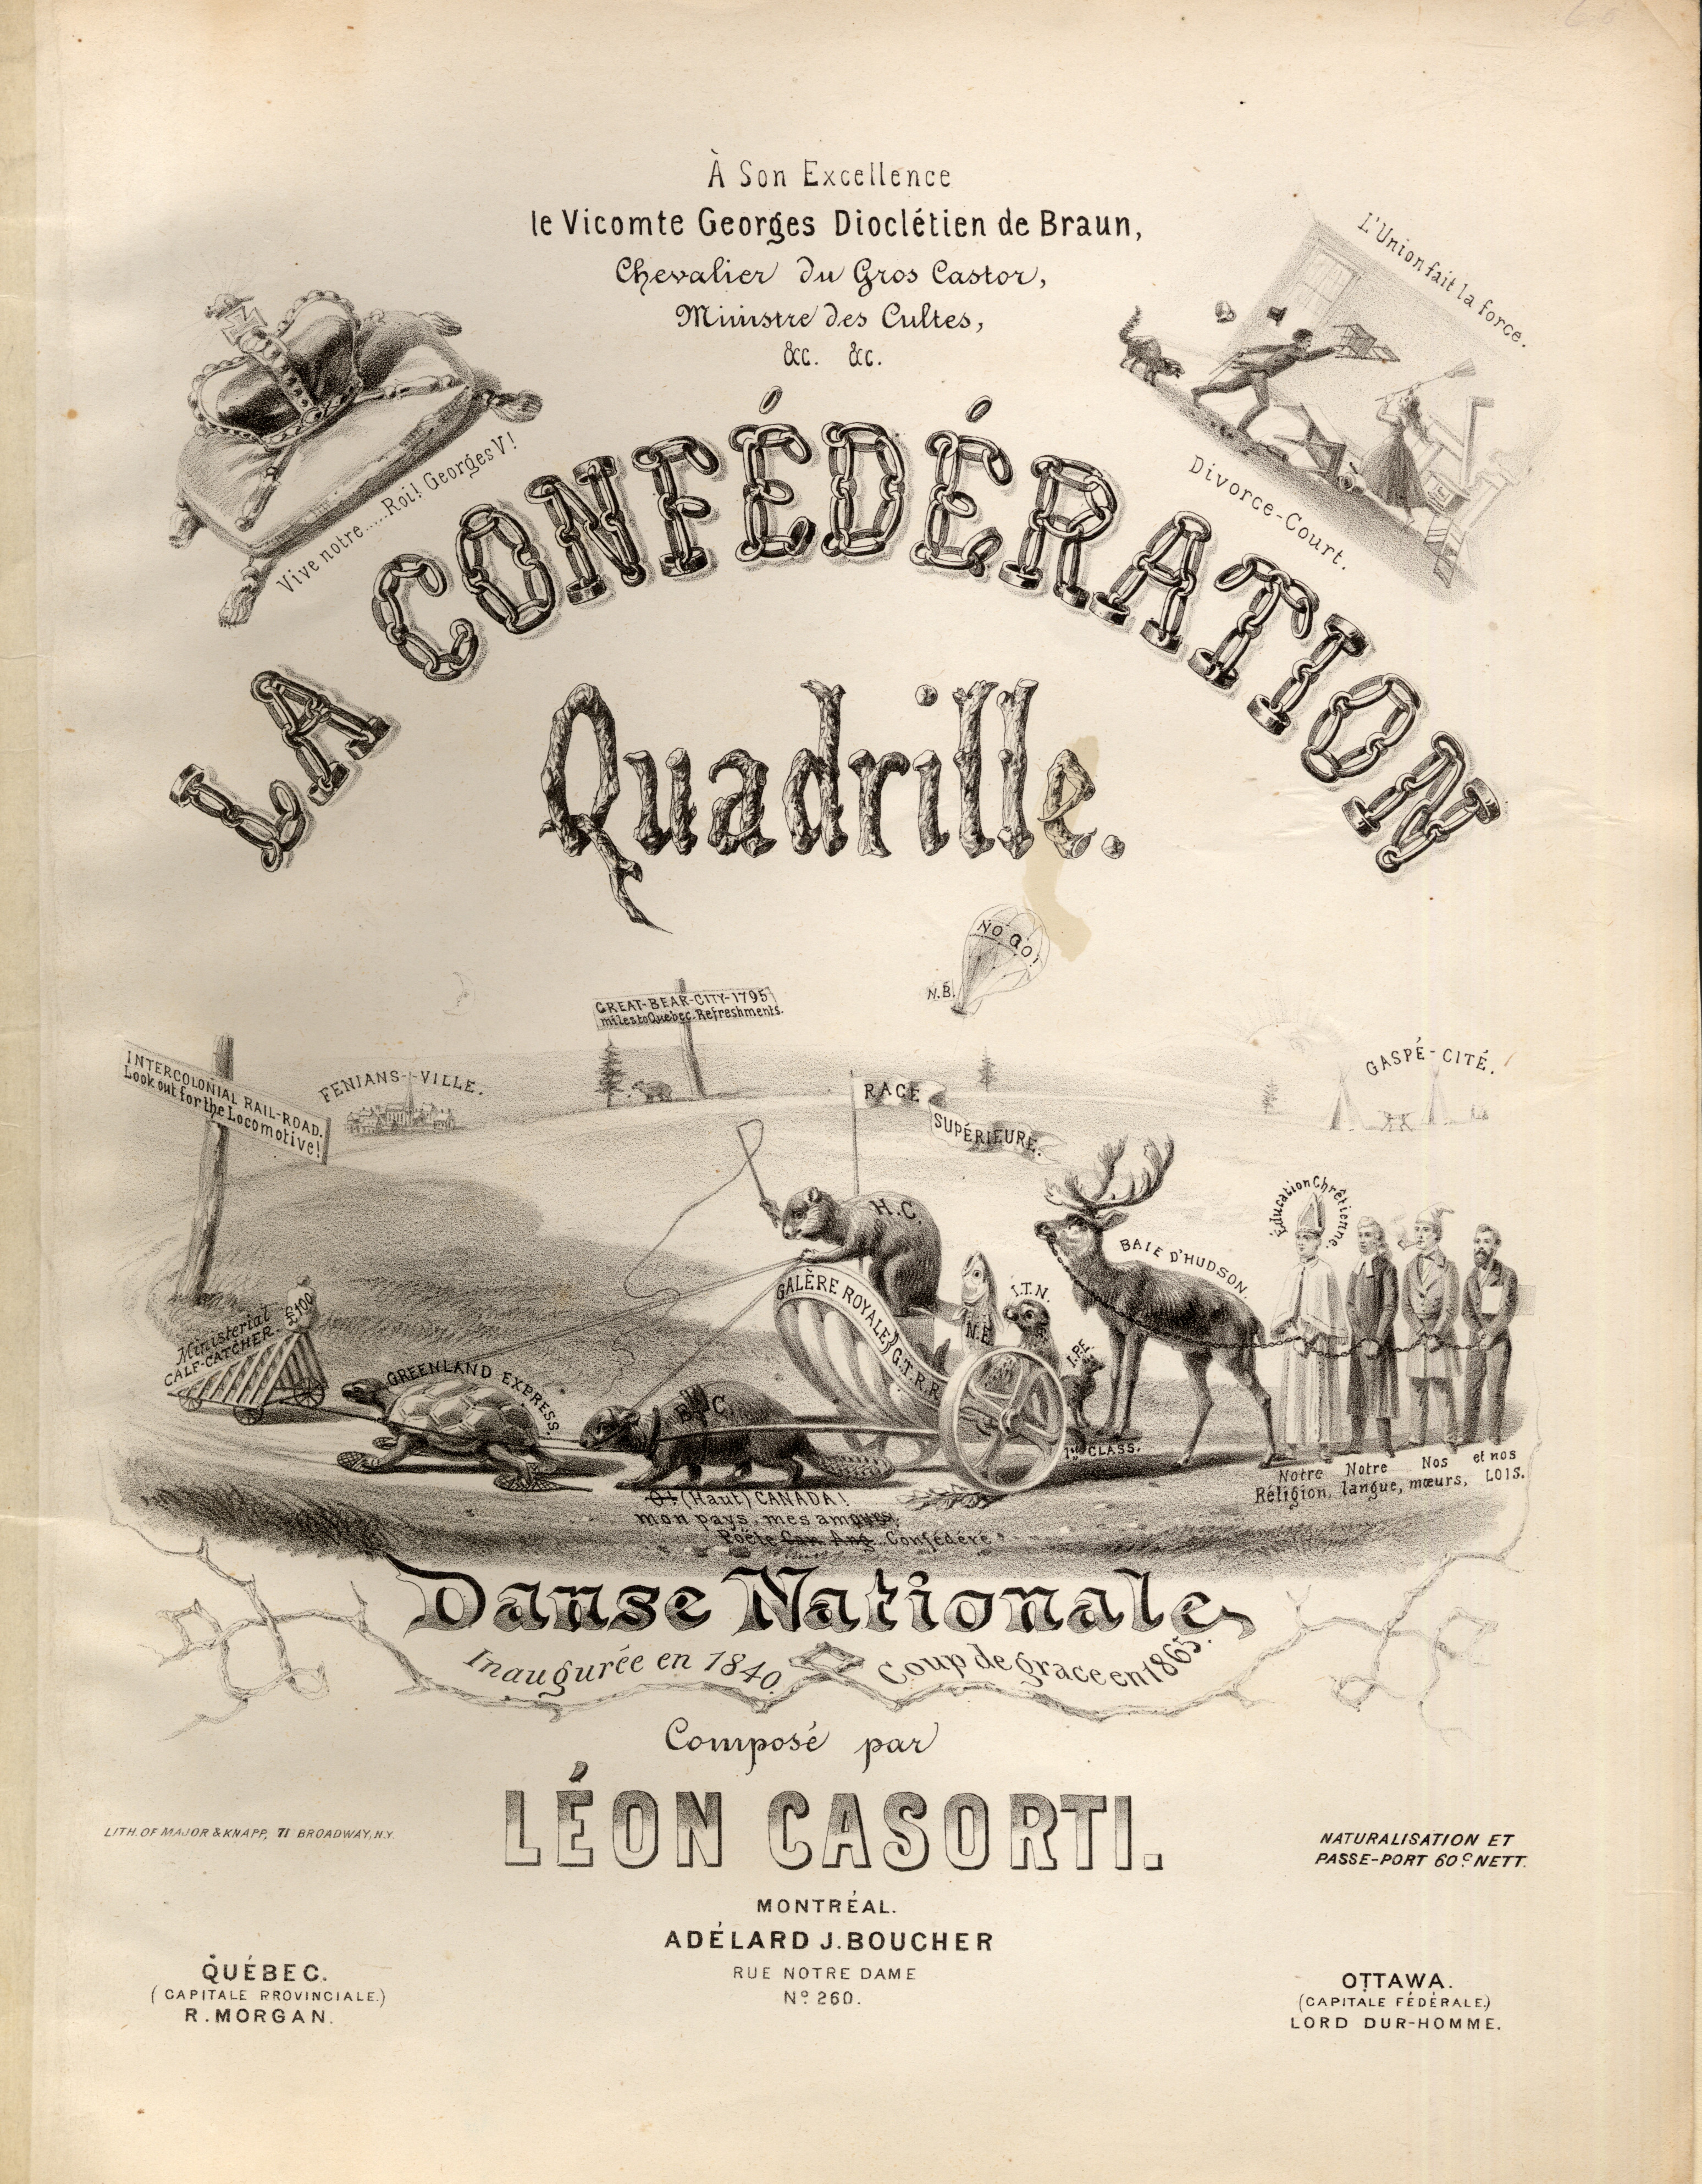 Illustrated cover of sheet music titled La Confédération Quadrille